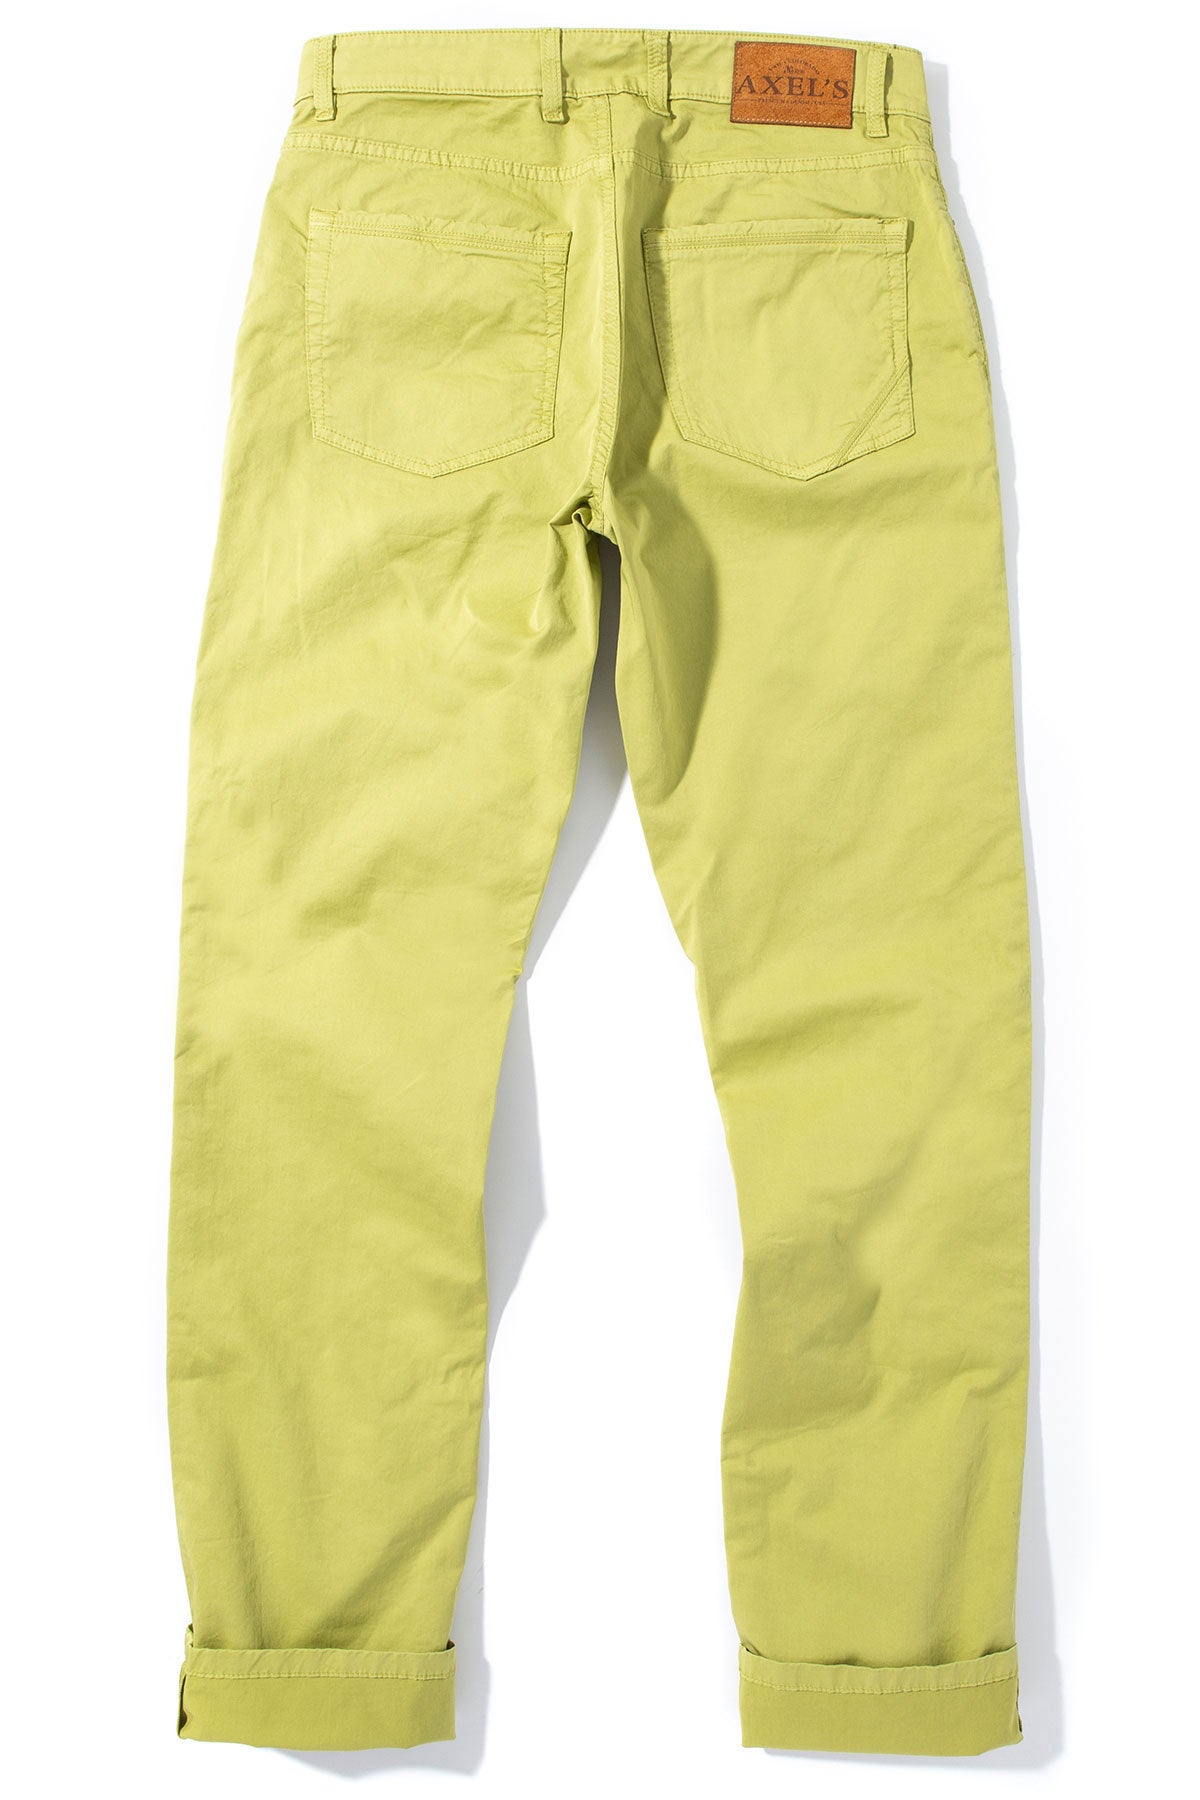 Mickelson Ultralight Performance Pant In Lime | Mens - Pants - 5 Pocket | Teleria Zed